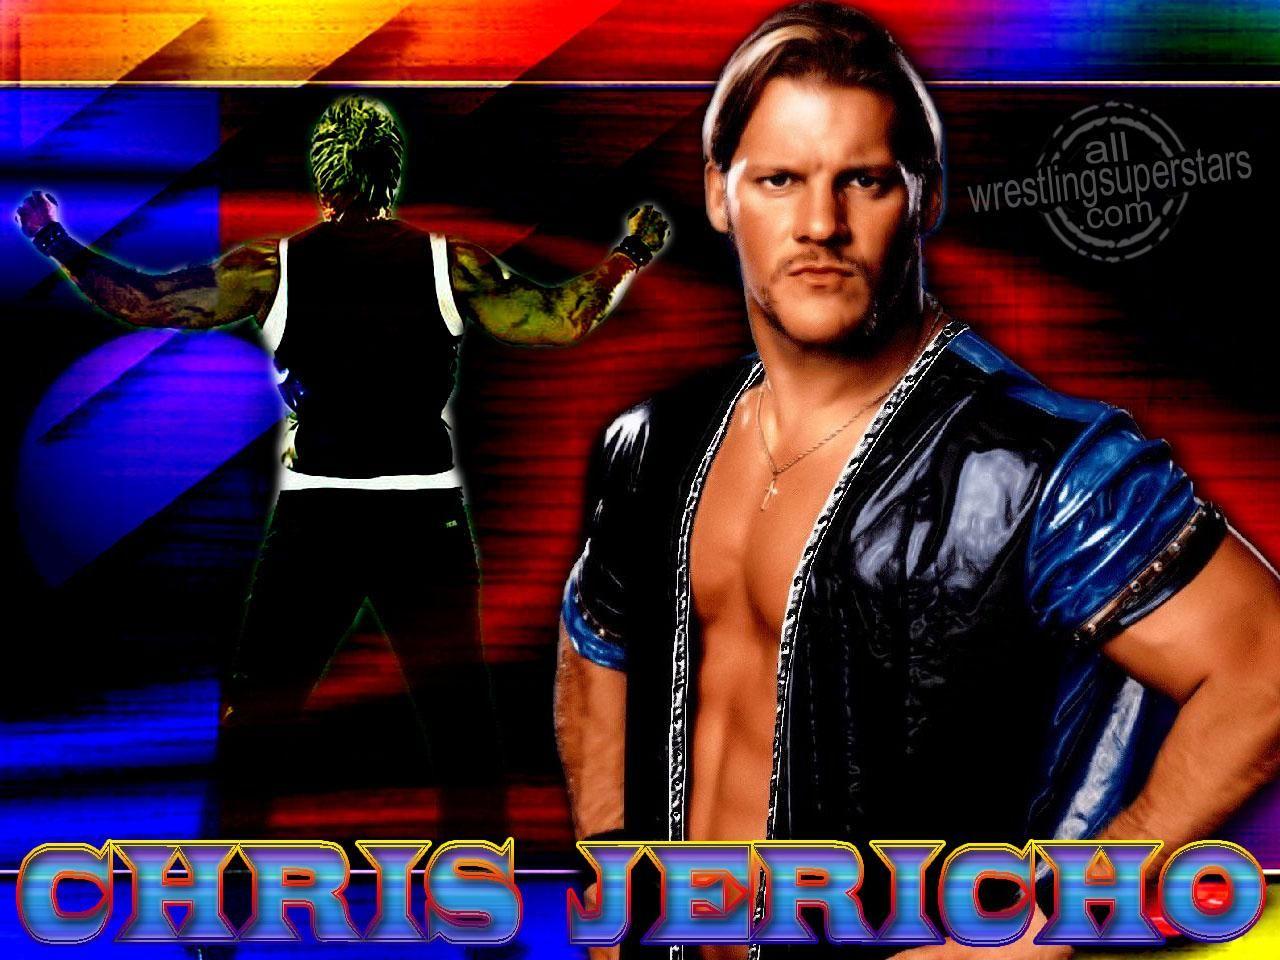 Chris Jericho - Chris Jericho Wallpaper (2305410) - Fanpop